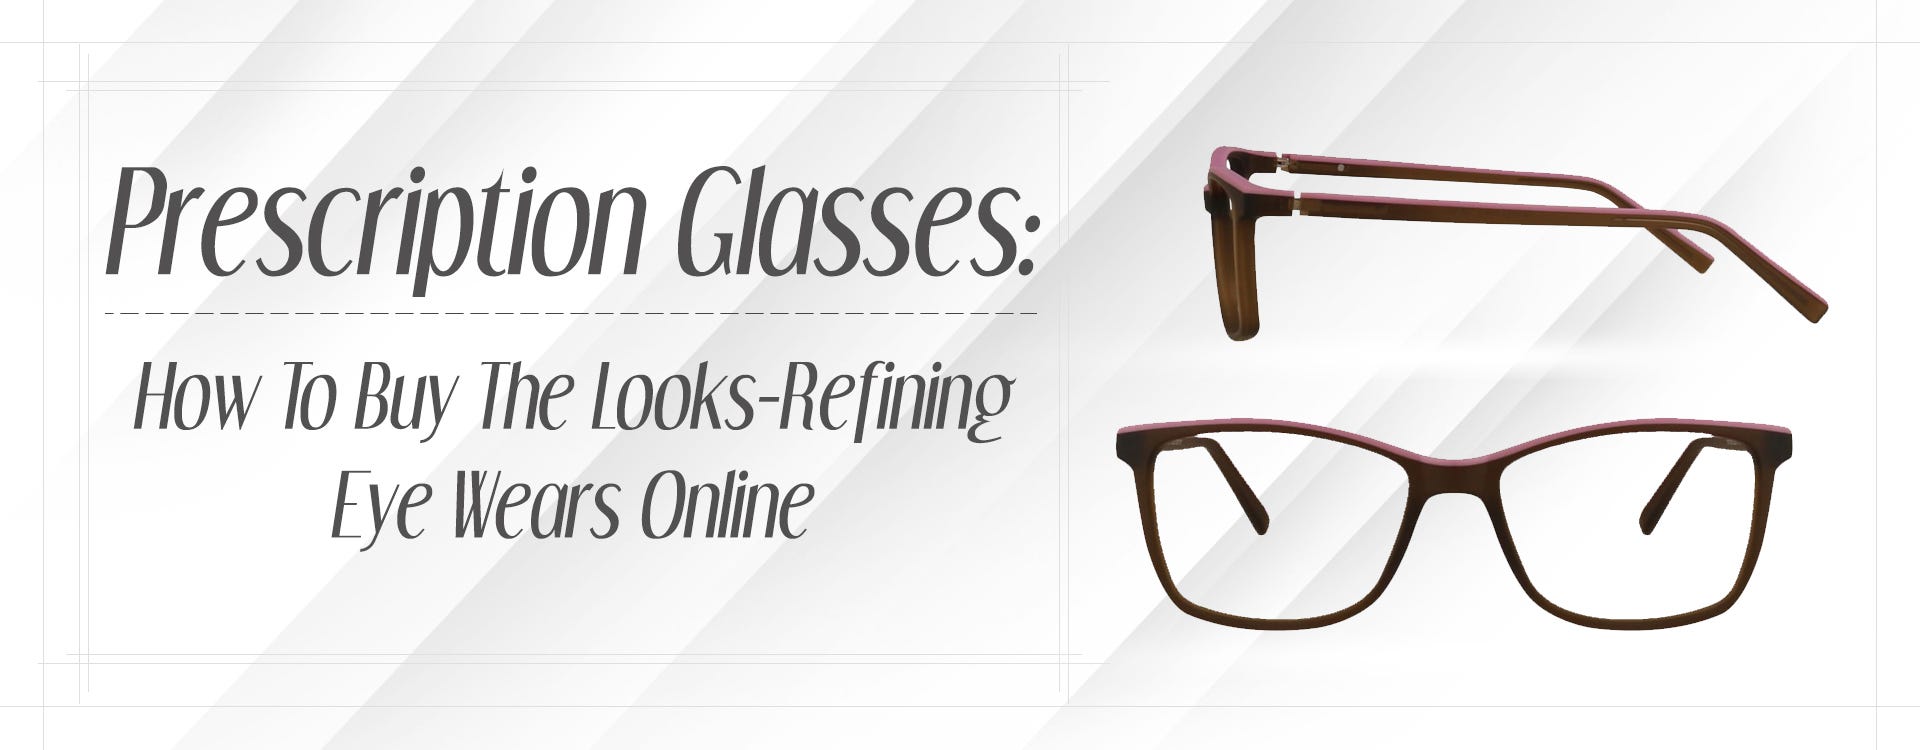 Prescription Glasses: How To Buy The Looks-Refining Eyewear Online 